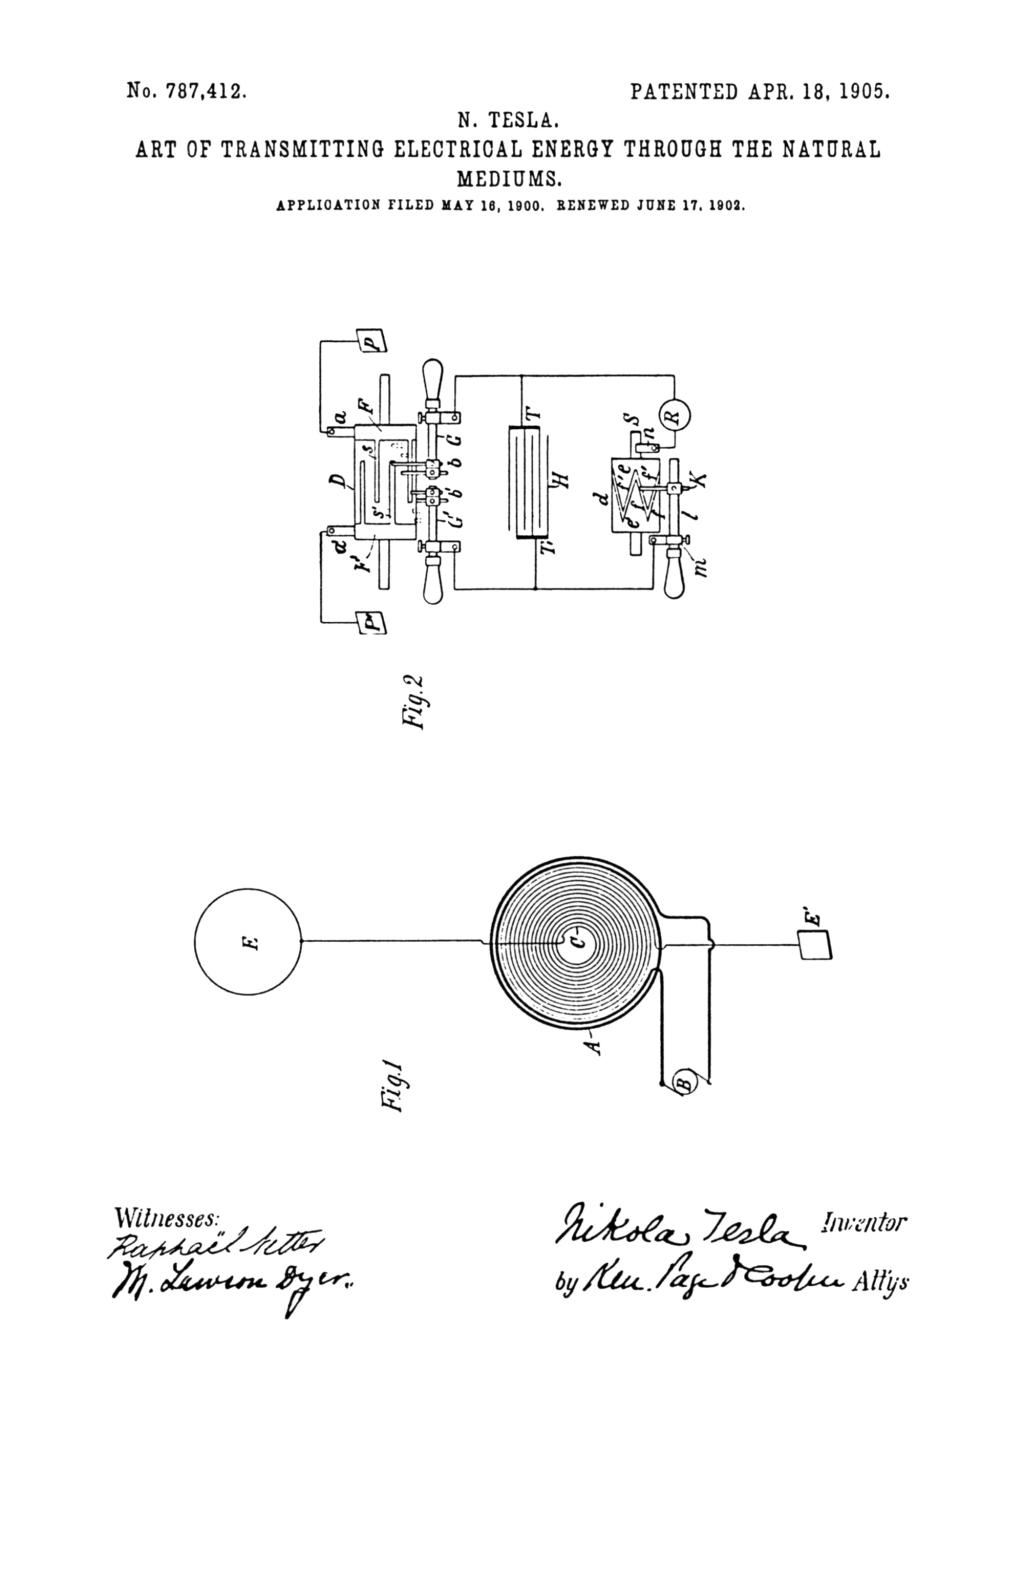 Nikola Tesla U.S. Patent 787,412 - Art of Transmitting Electrical Energy through the Natural Mediums - Image 1